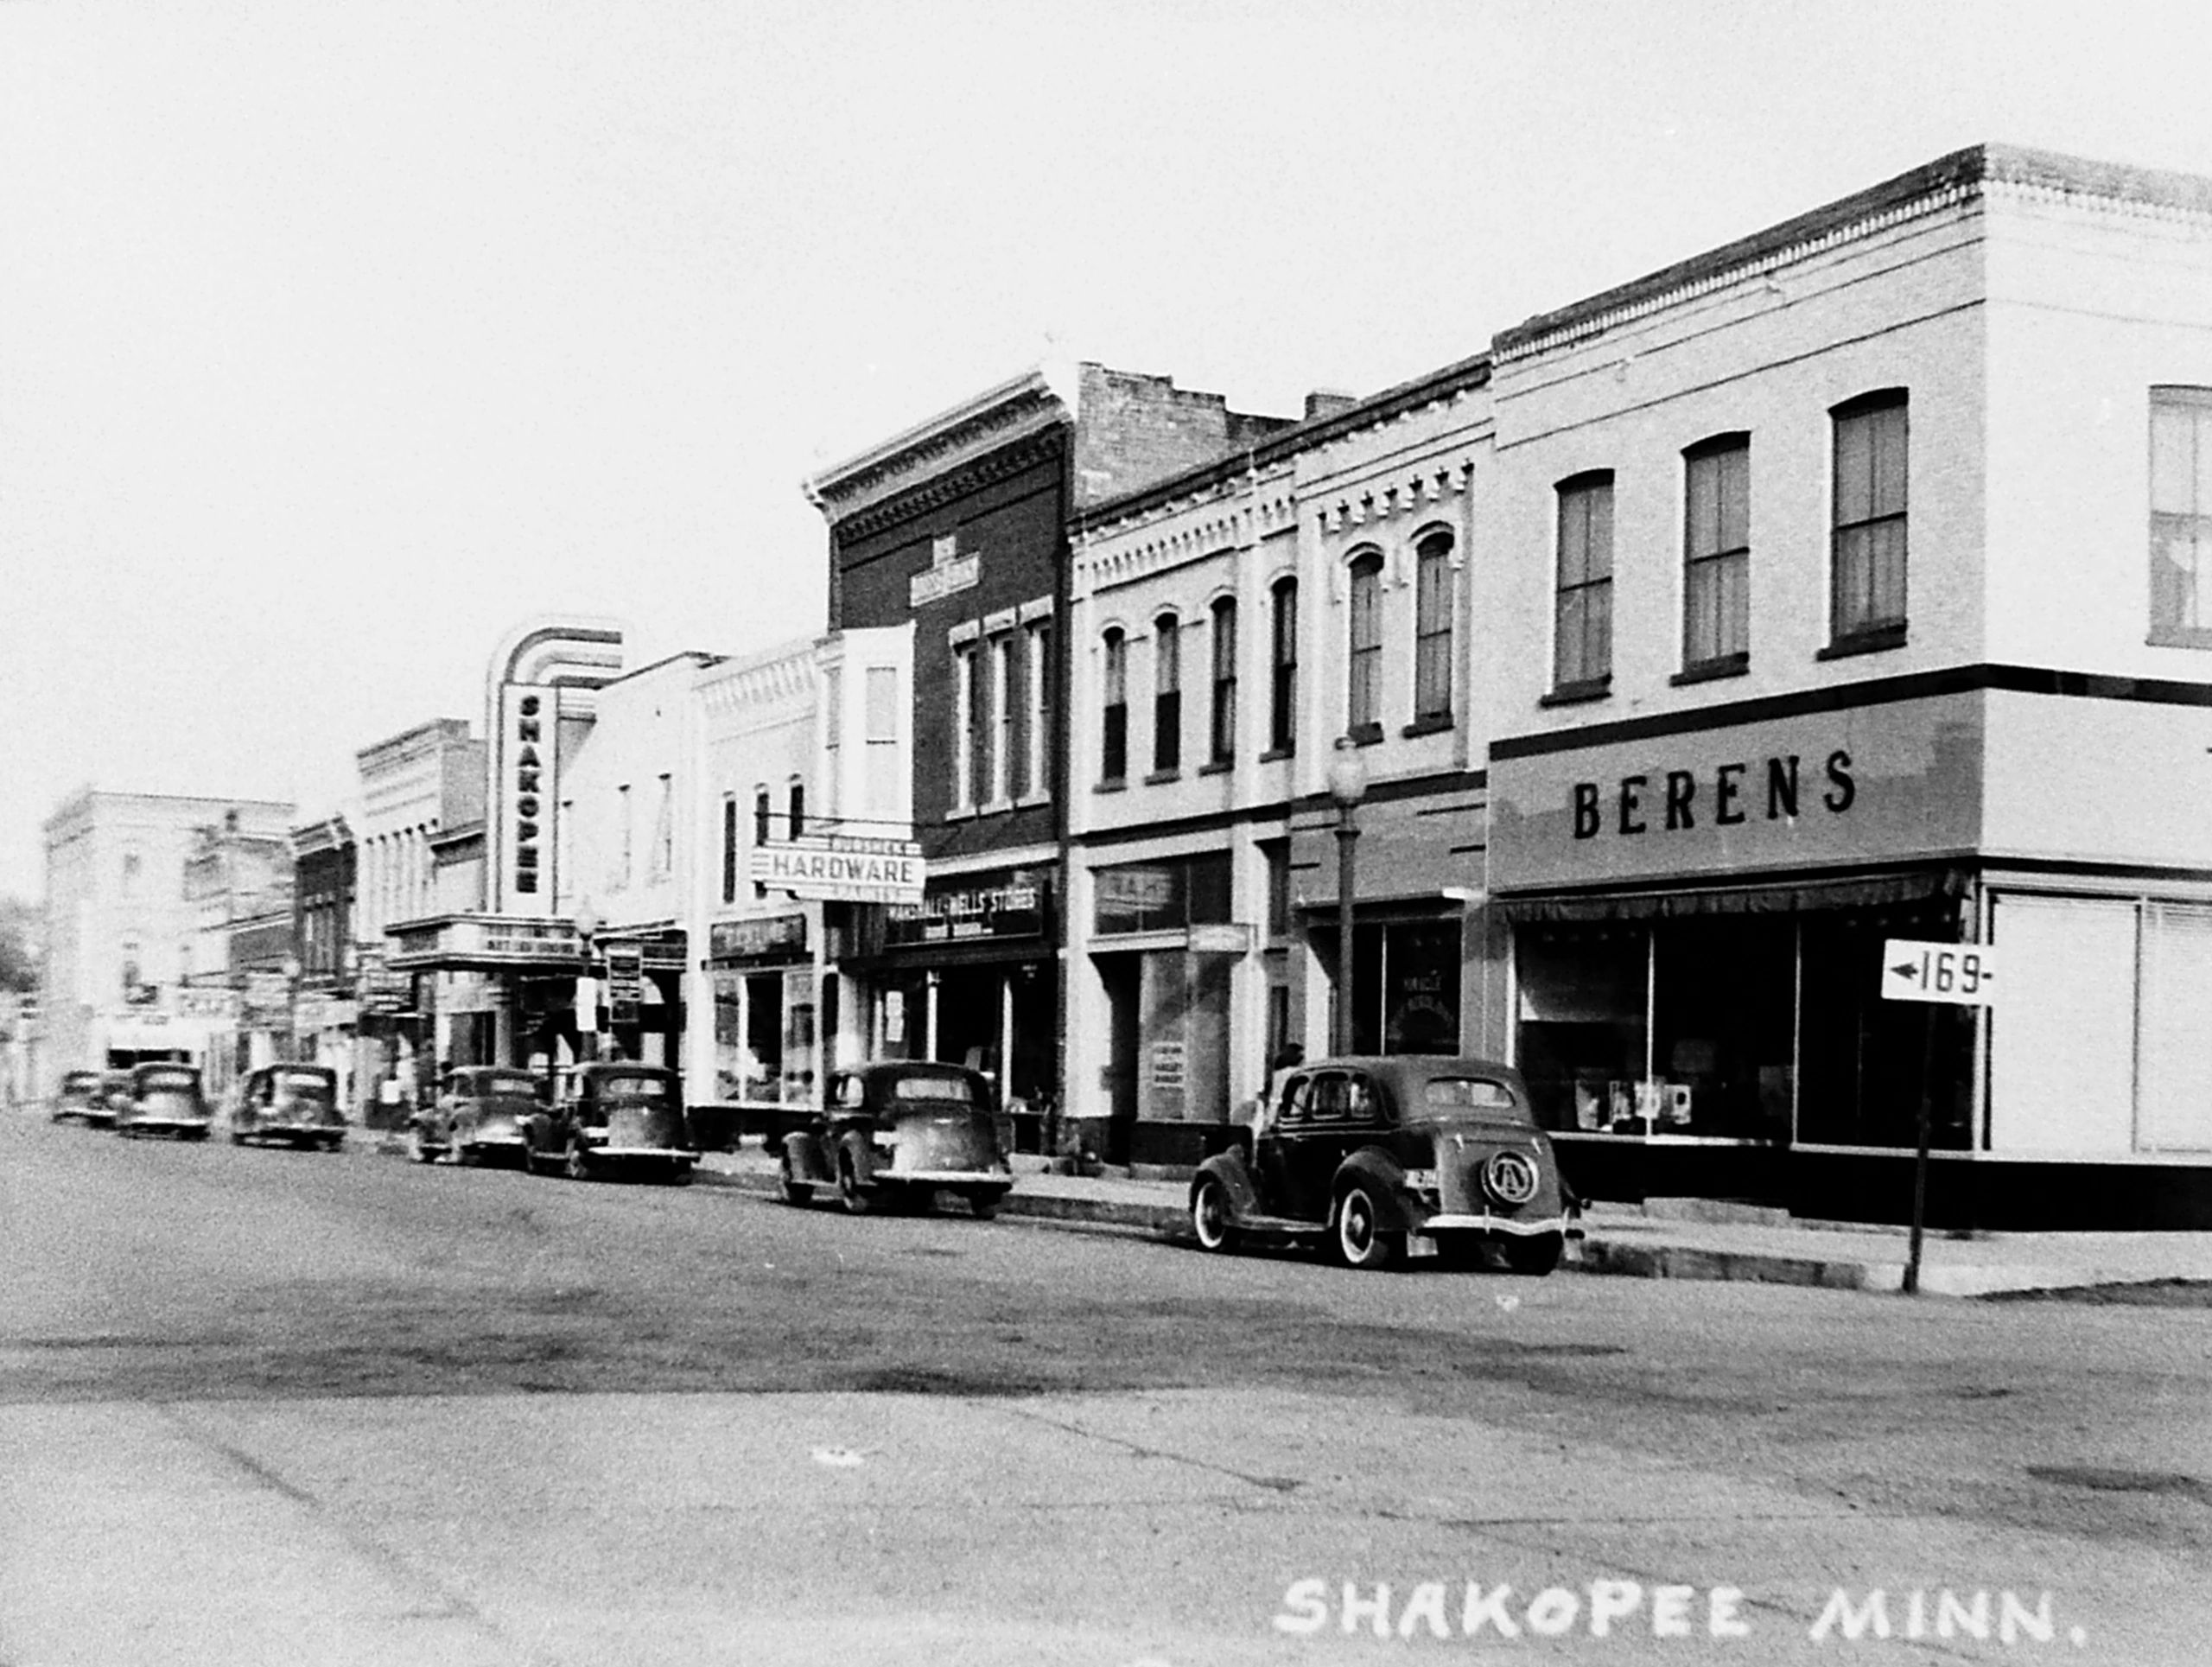 Downtown Shakopee circa 1940s